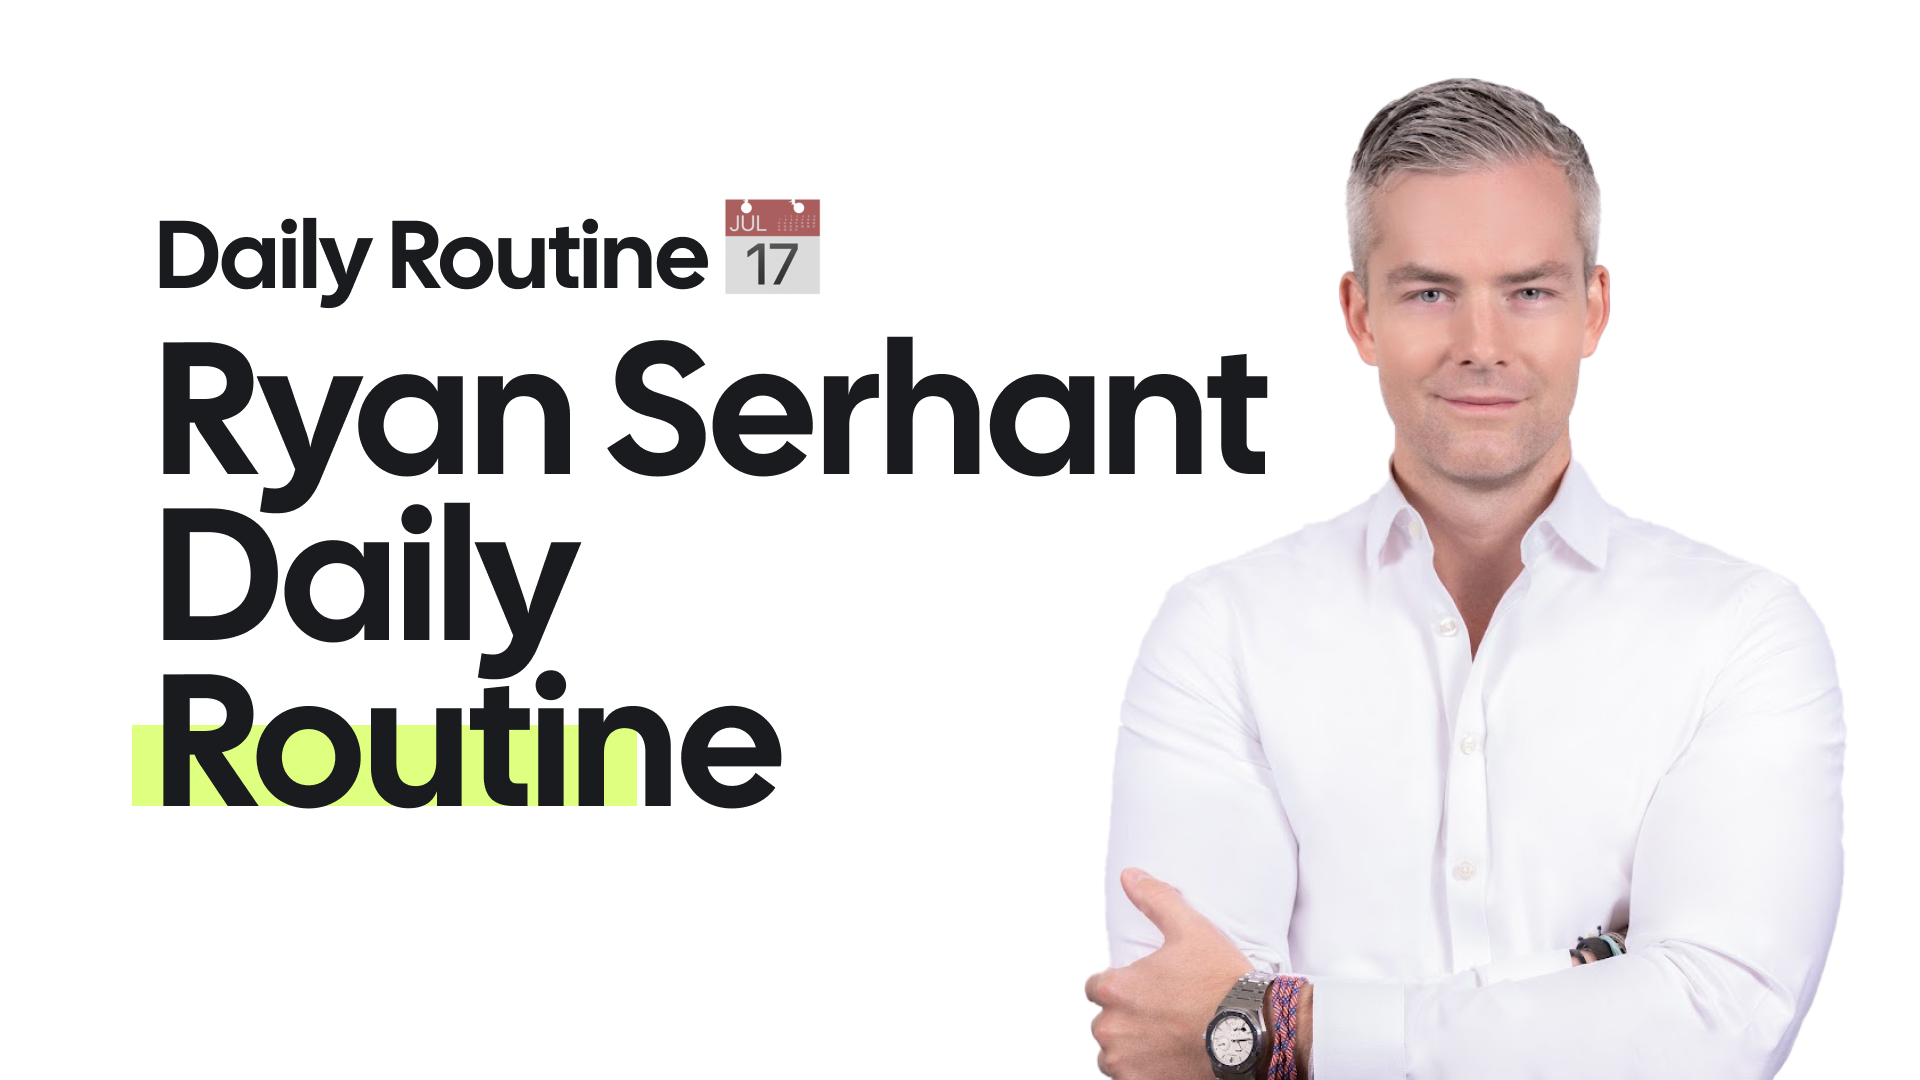 Ryan Serhant's Daily Real Estate Routine